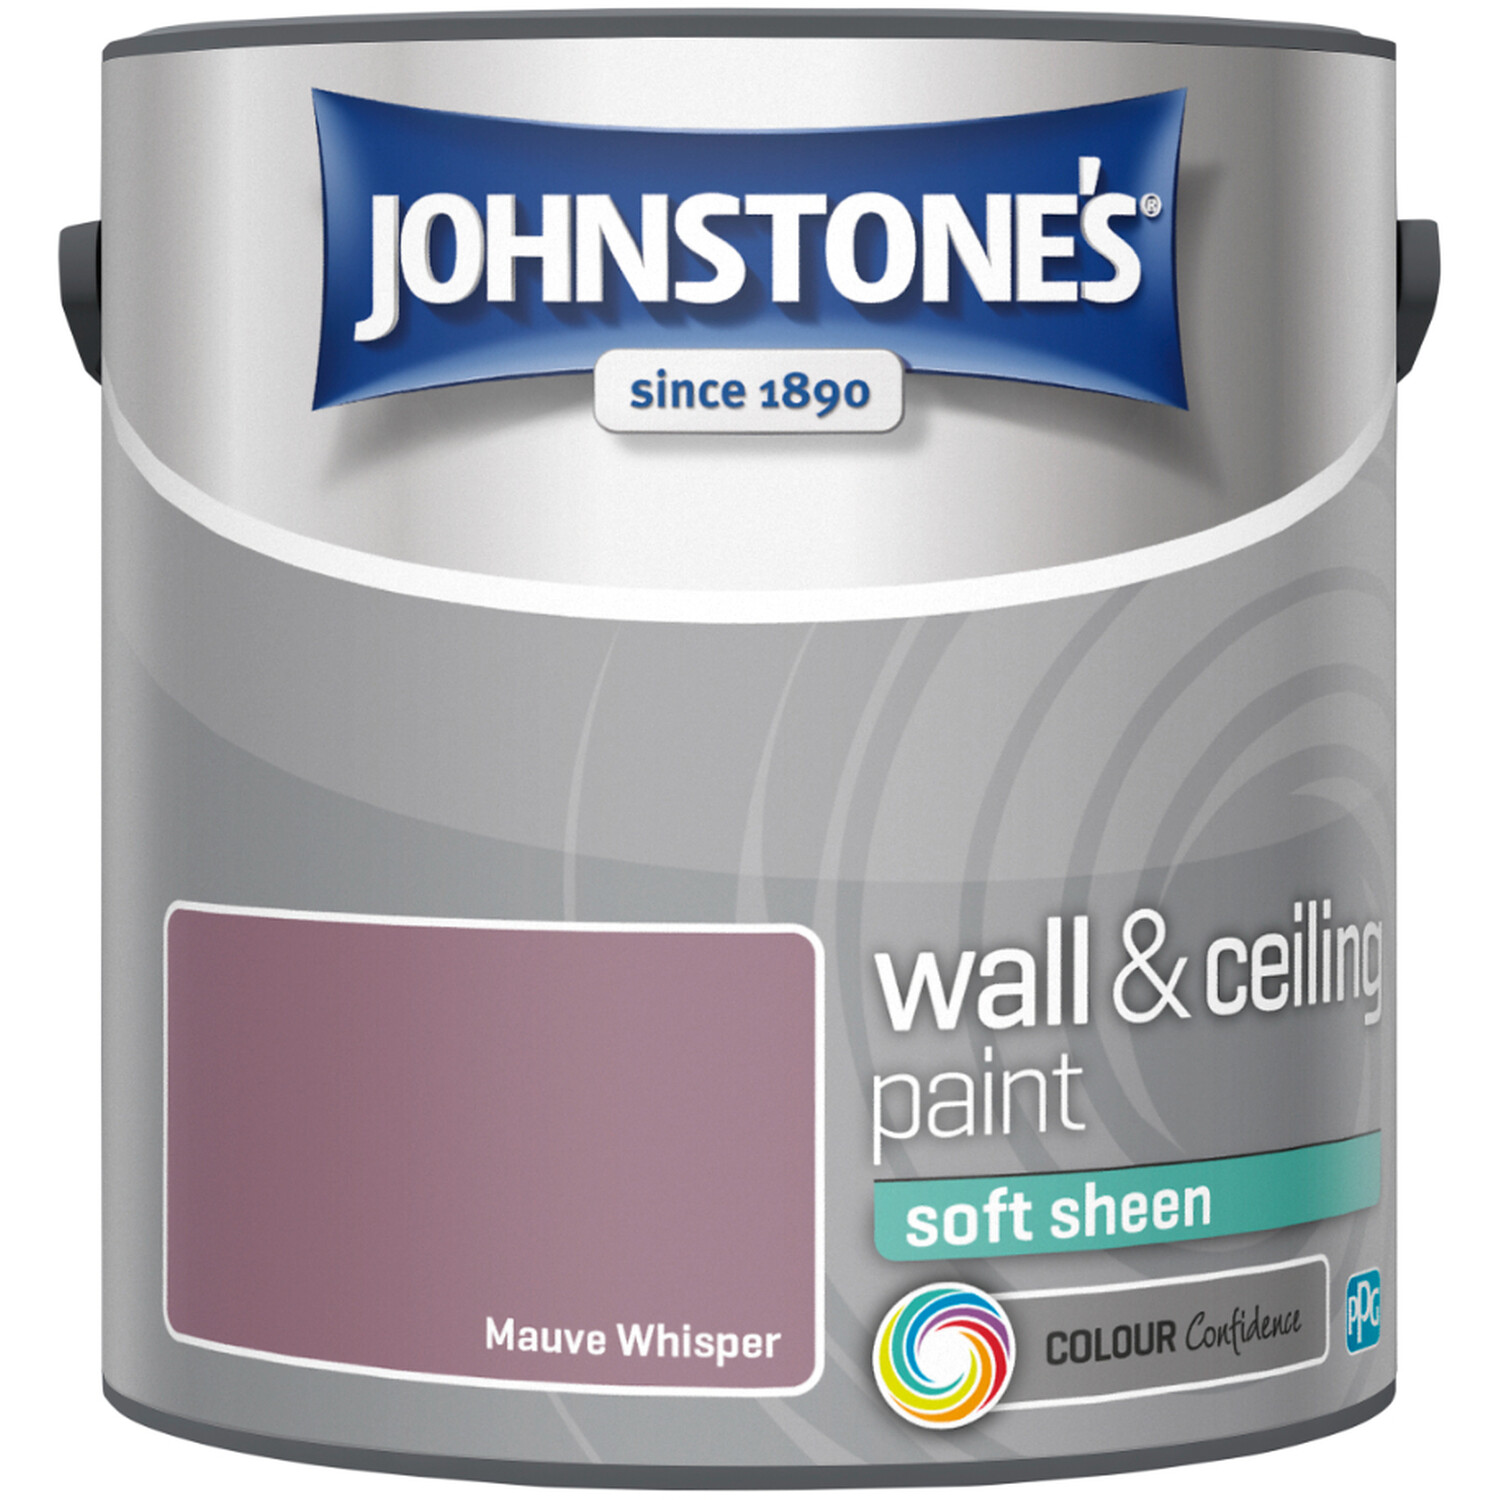 Johnstones Soft Sheen Emulsion Paint - Mauve Whisper / 2.5l Image 2